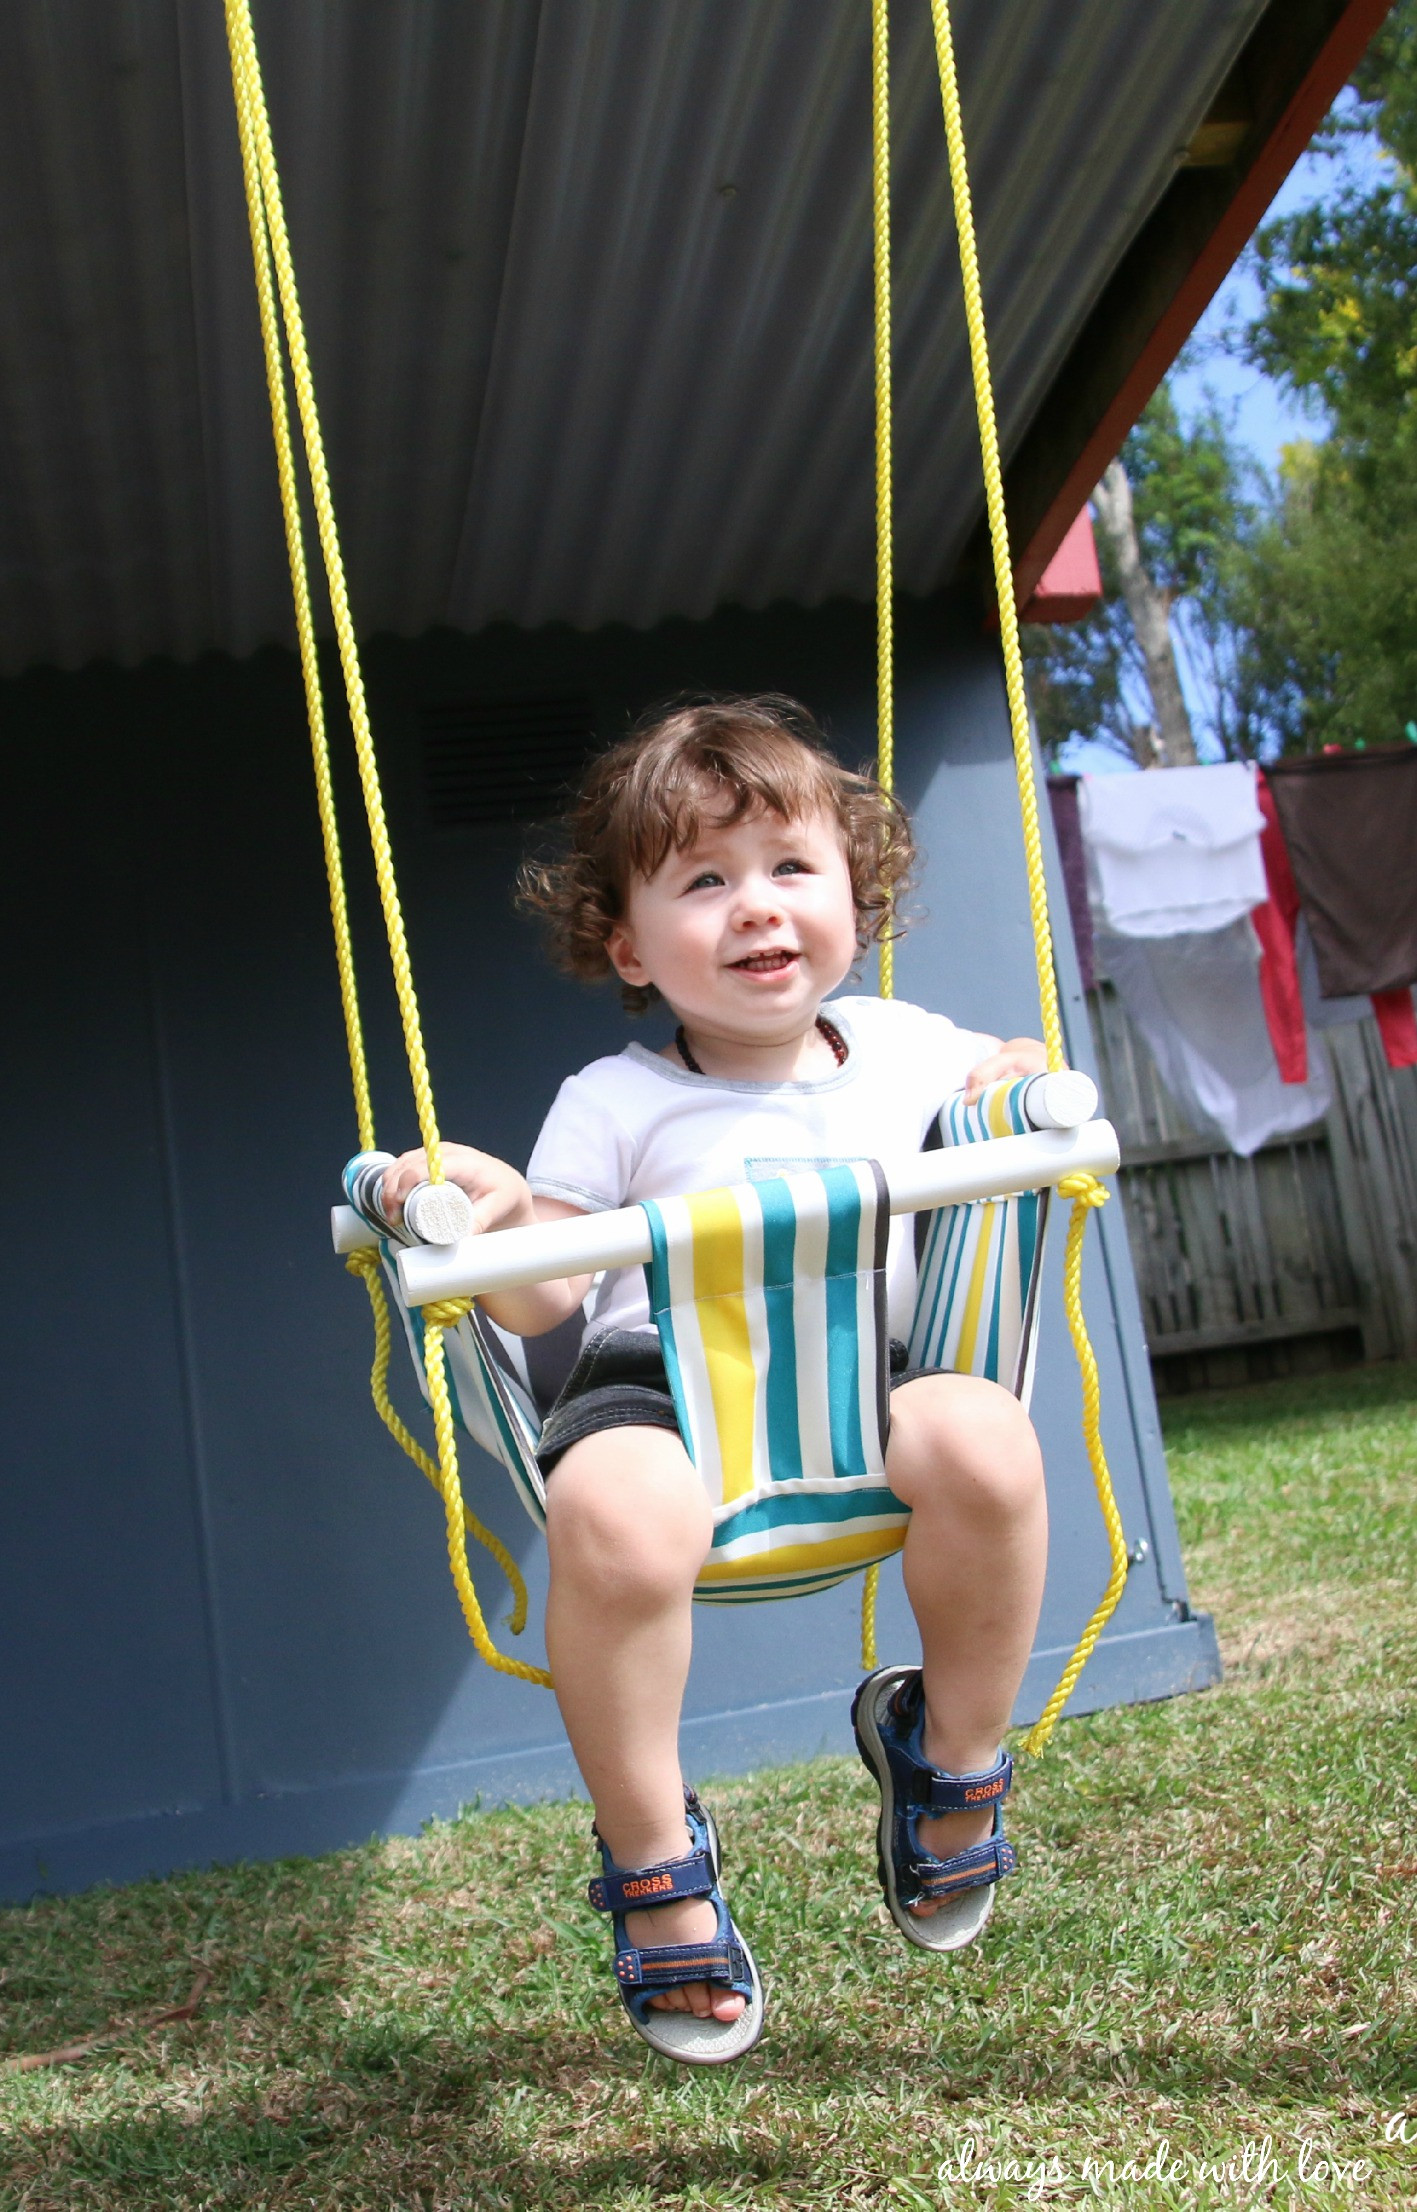 DIY Baby Swings
 DIY Baby Toddler Swing Always Made With Love